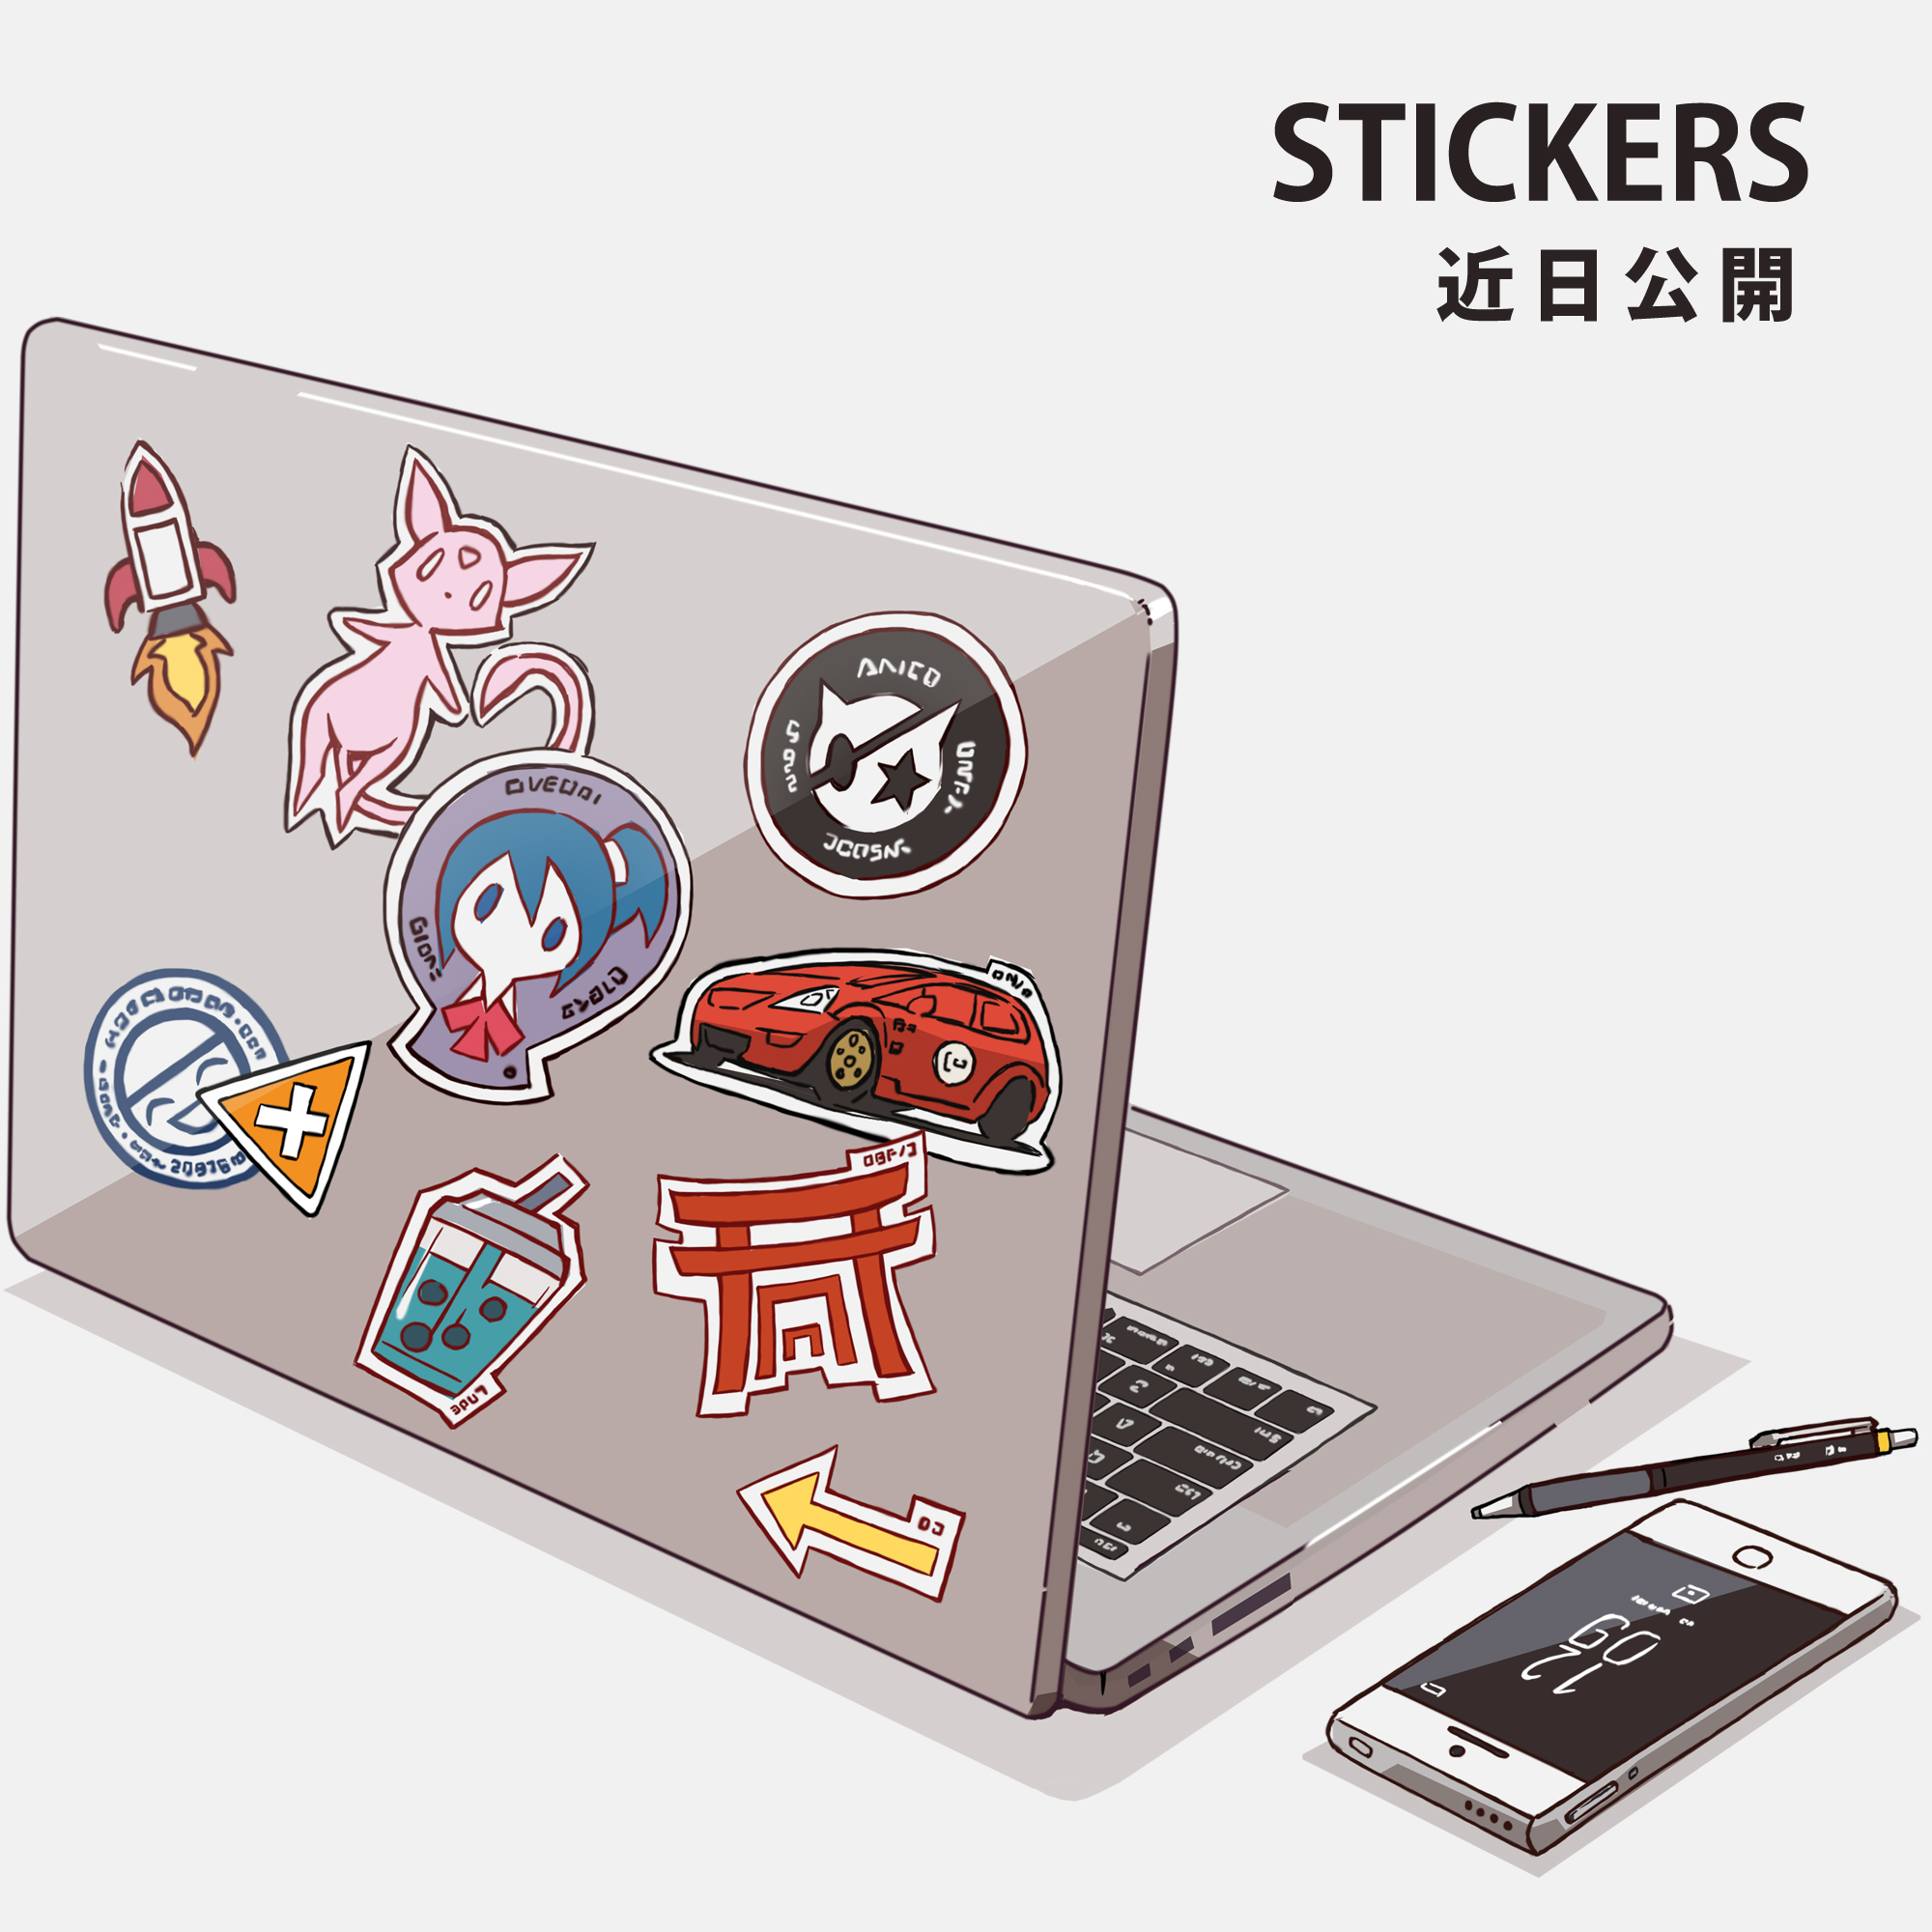 Cartoon Anime Sticker 200 Pcs Anime Mixed Stickers Vinyl Waterproof for Laptop  Stickers,Skateboard, Hydro Flask, Water Bottle, Computer, Guitar,Luggage,  Bike Bumper.Adults Kids Teens for Stickers | Flyers Online